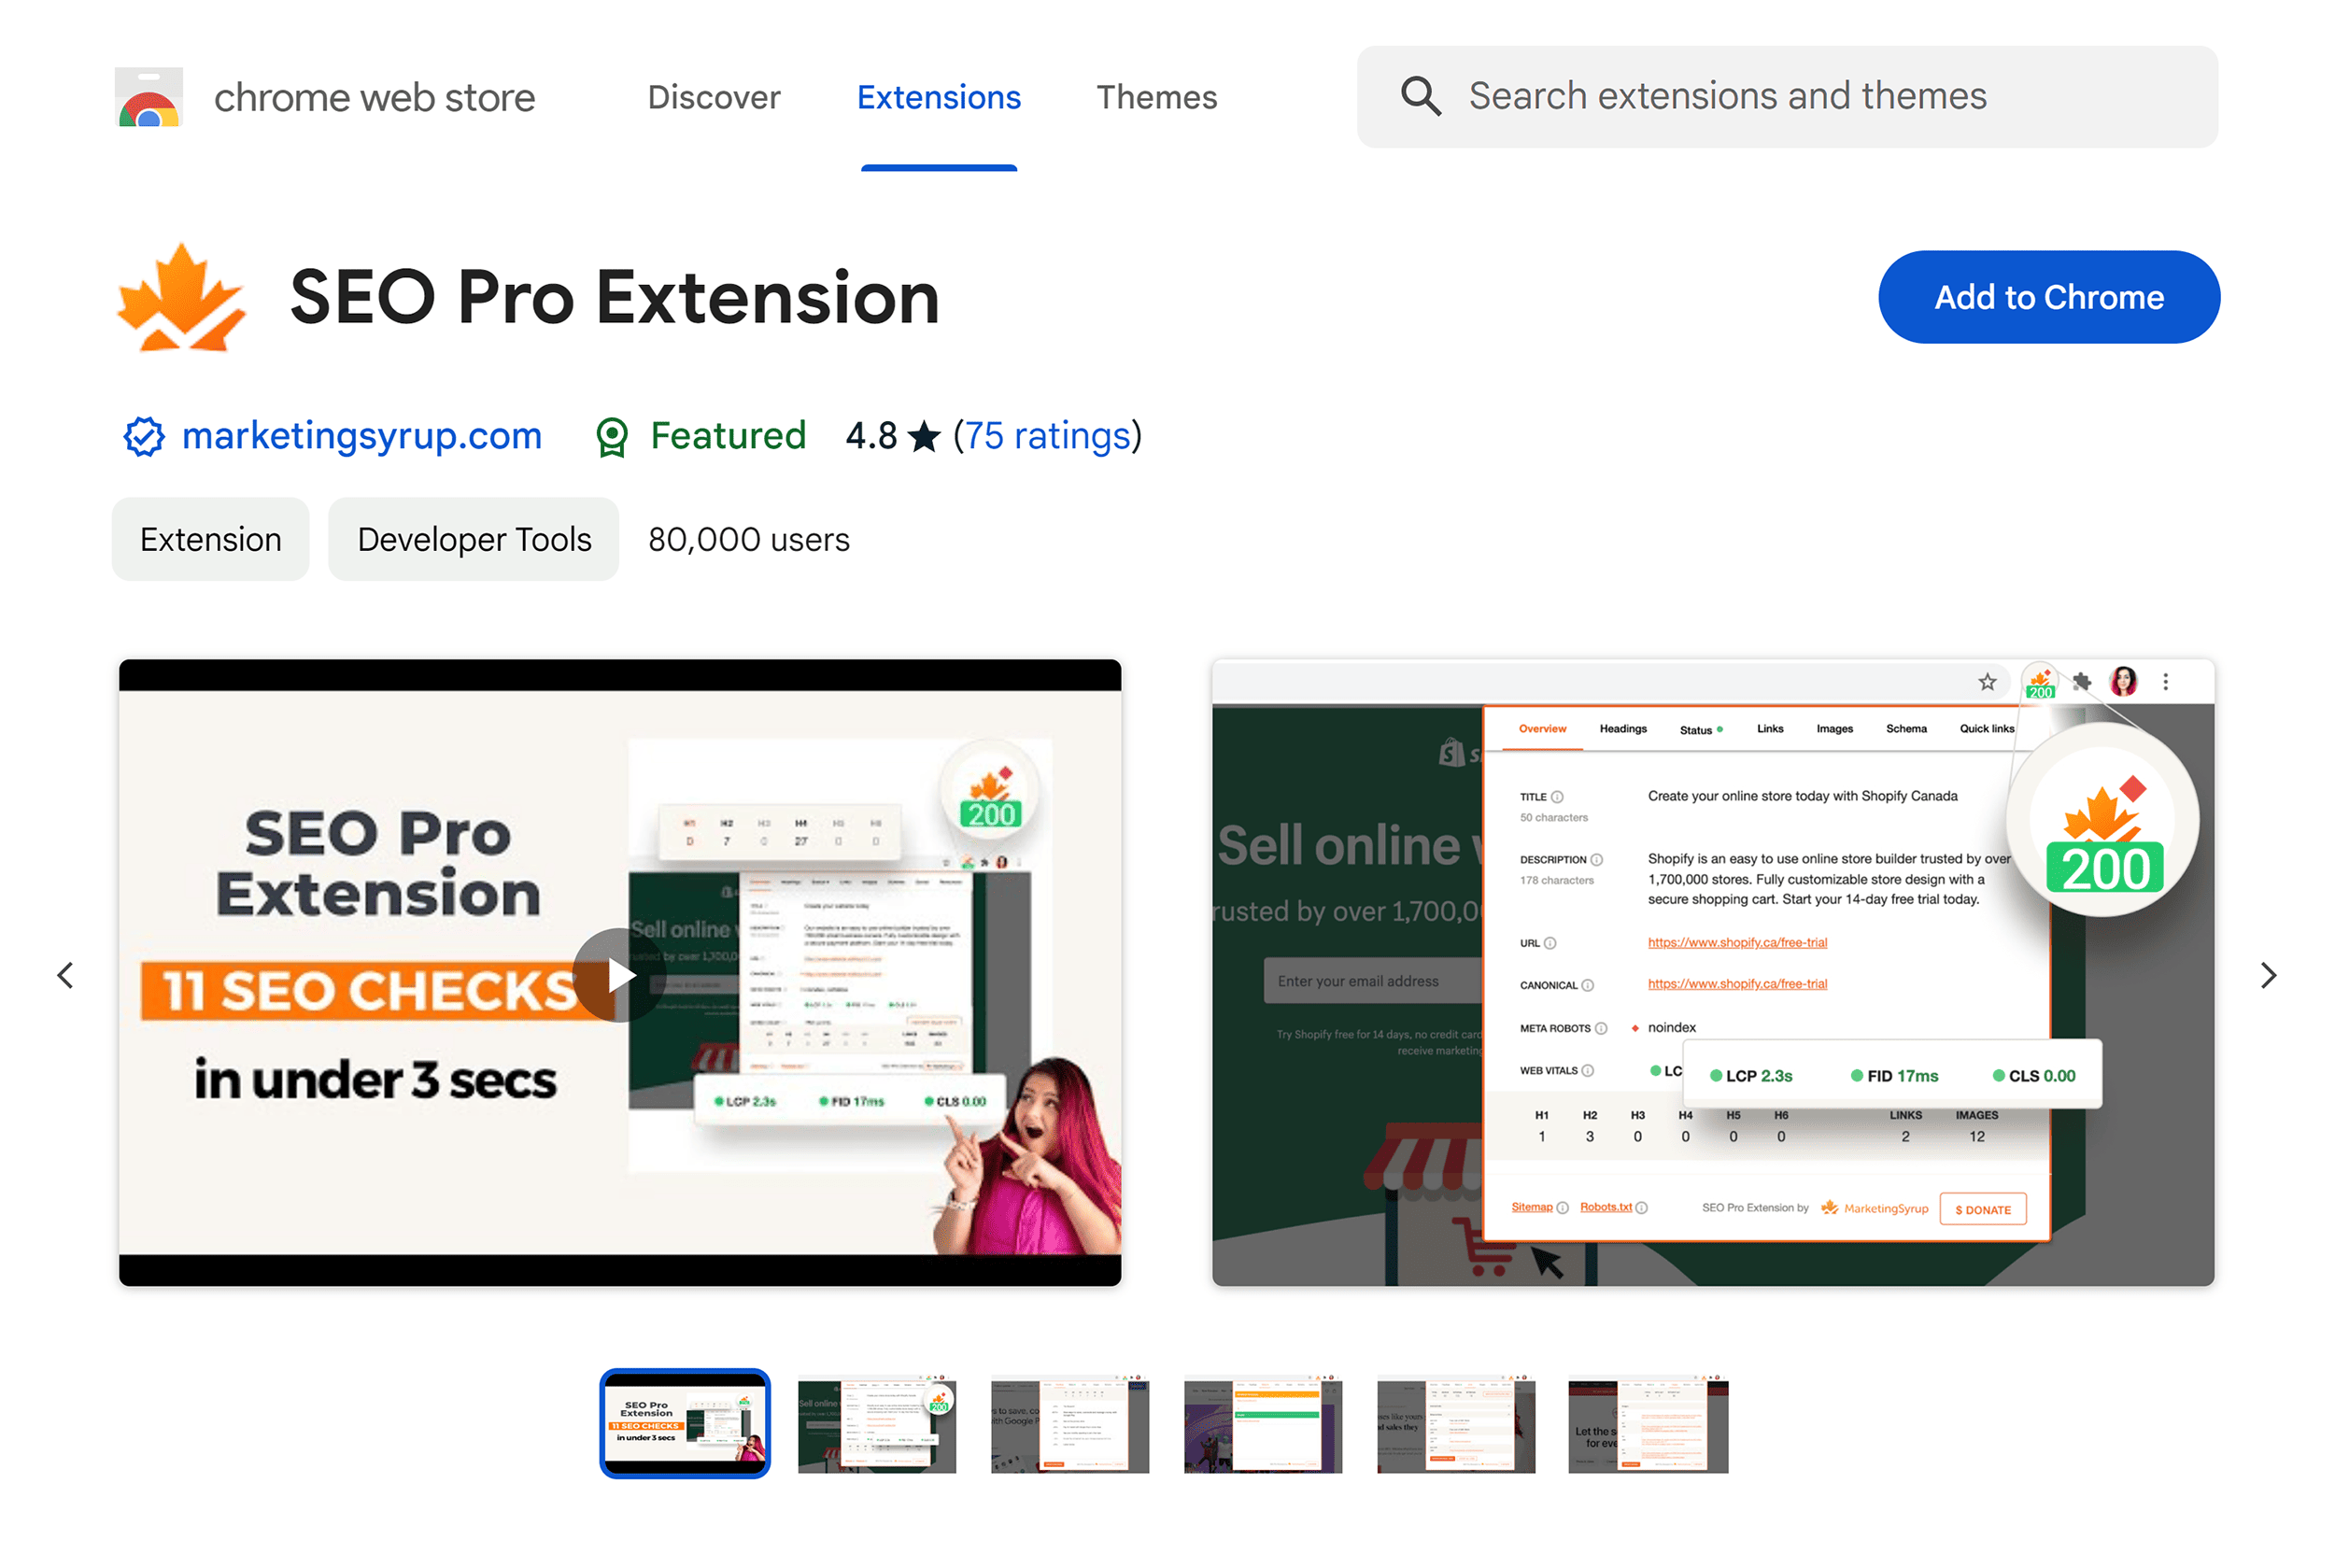 Chrome Web Store – SEO Pro Extension